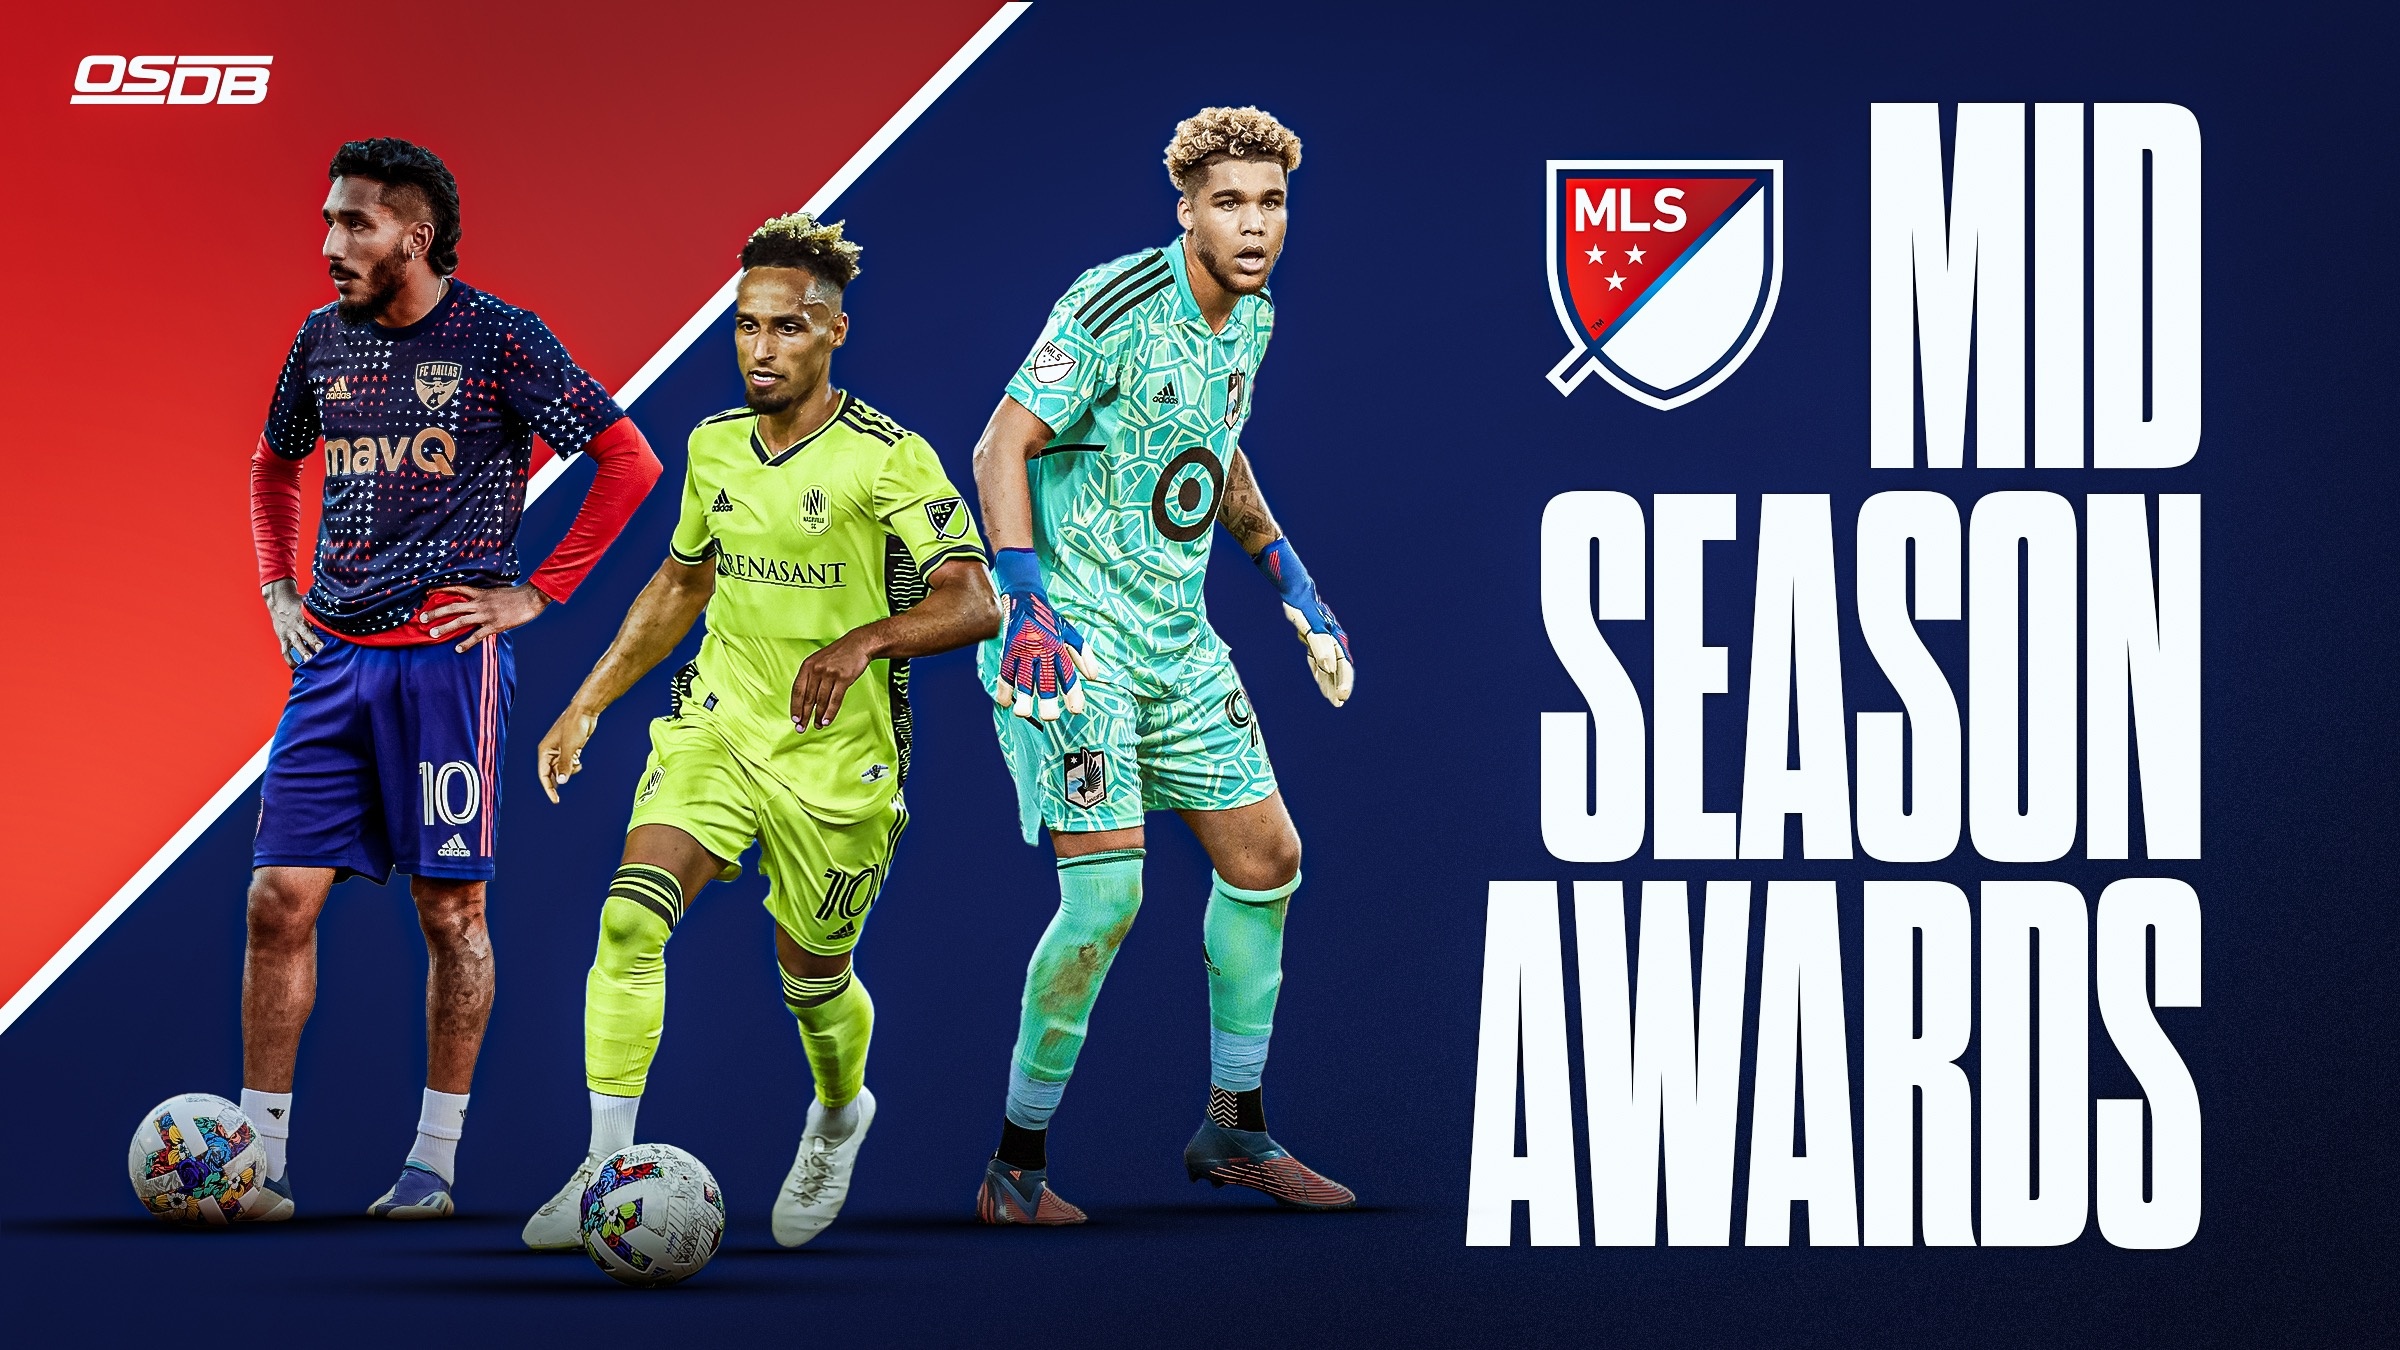 MLS Midseason Awards